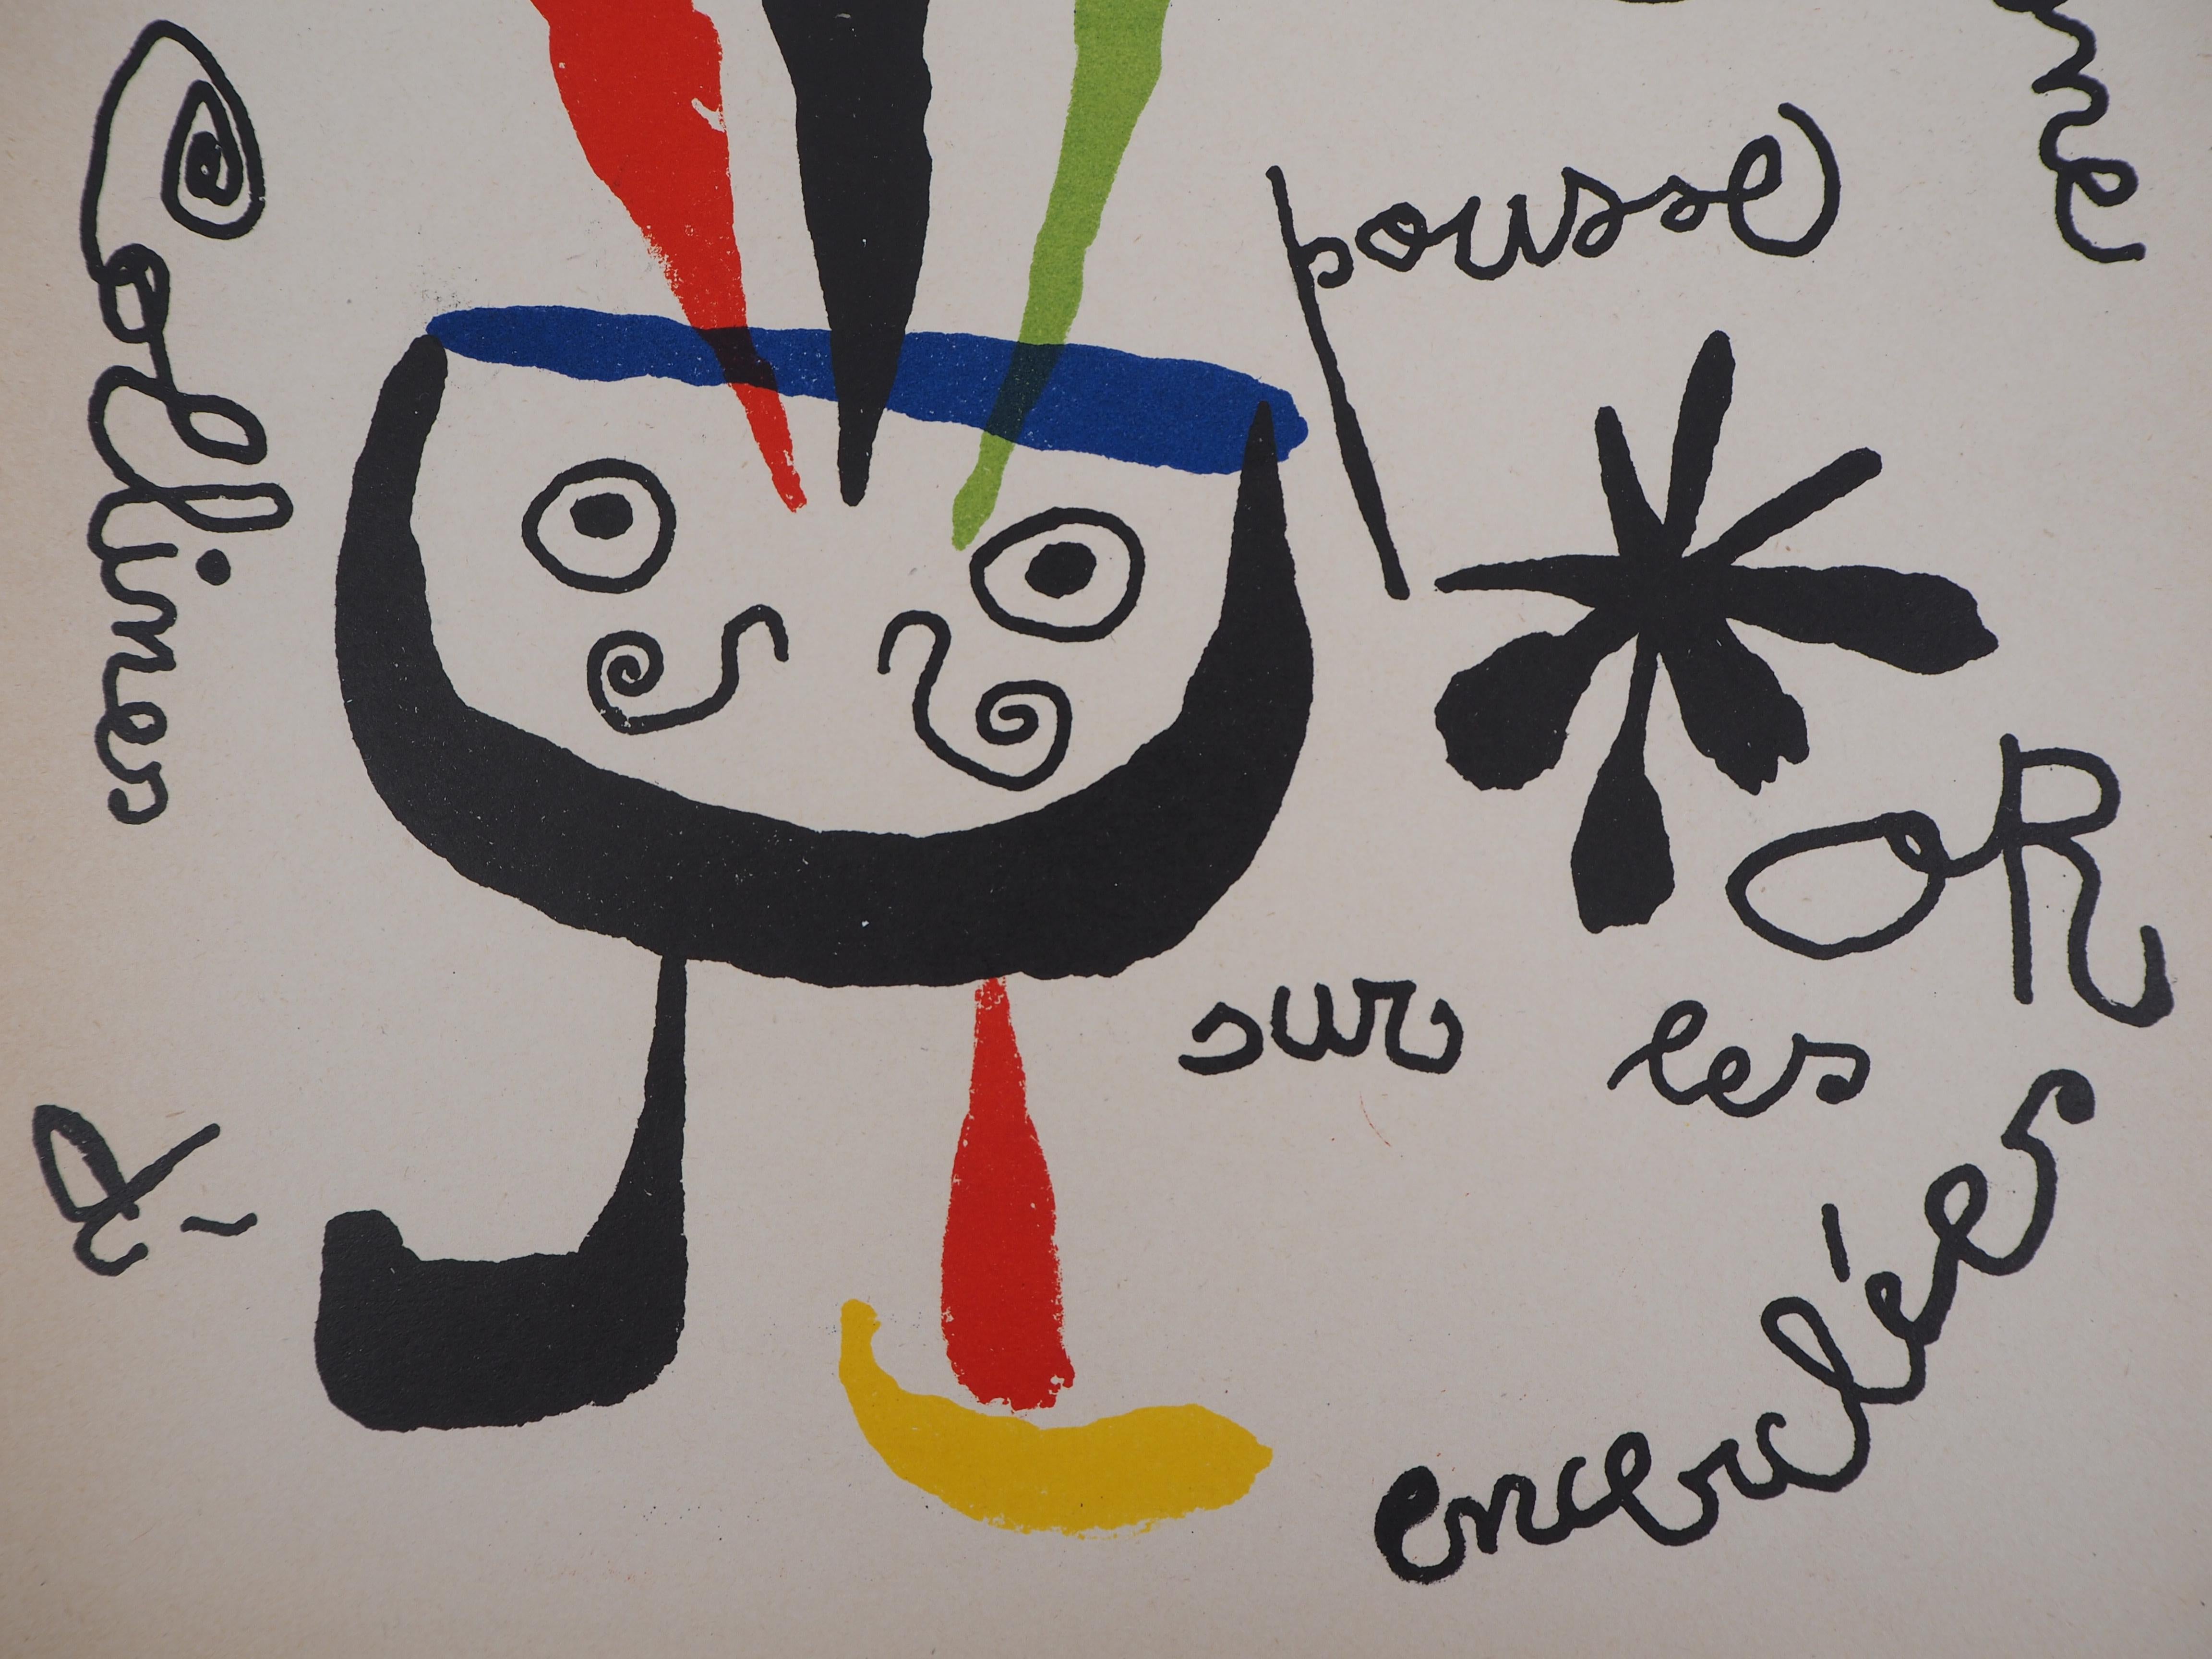 The Bird - Original lithograph - (Mourlot #185) - Abstract Print by Joan Miró